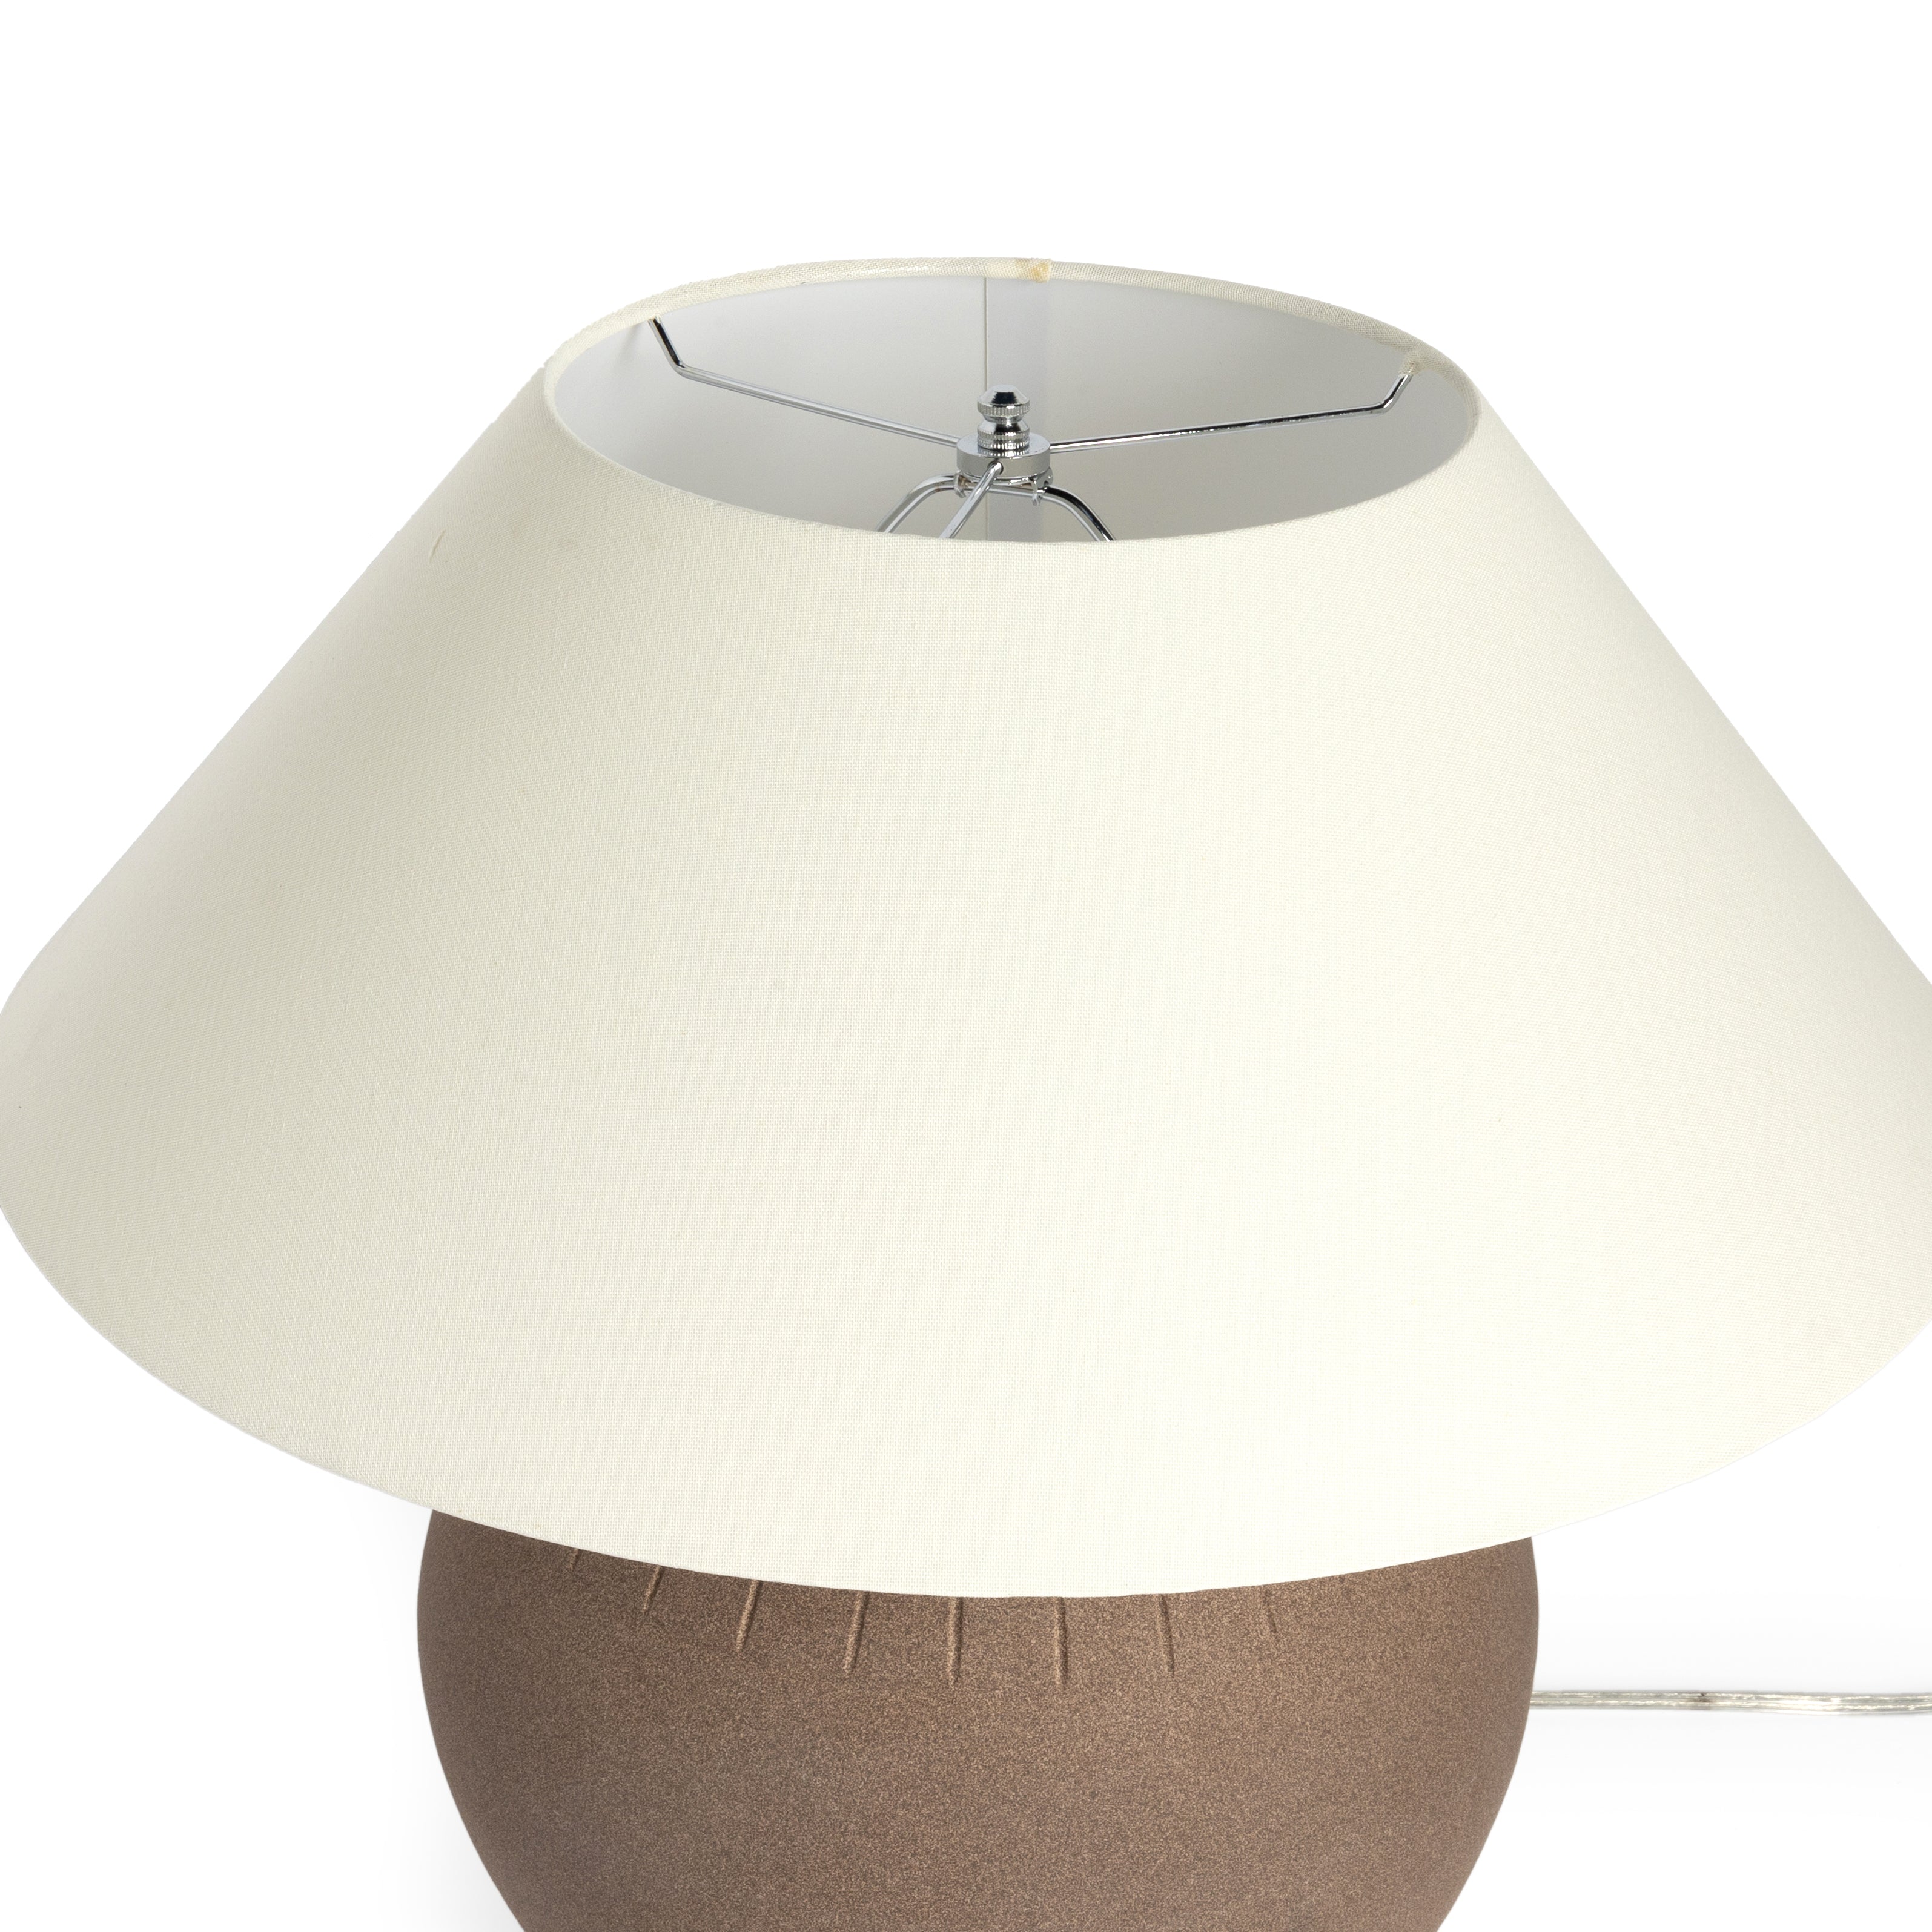 Honus Table Lamp-Dark Sand - StyleMeGHD - 